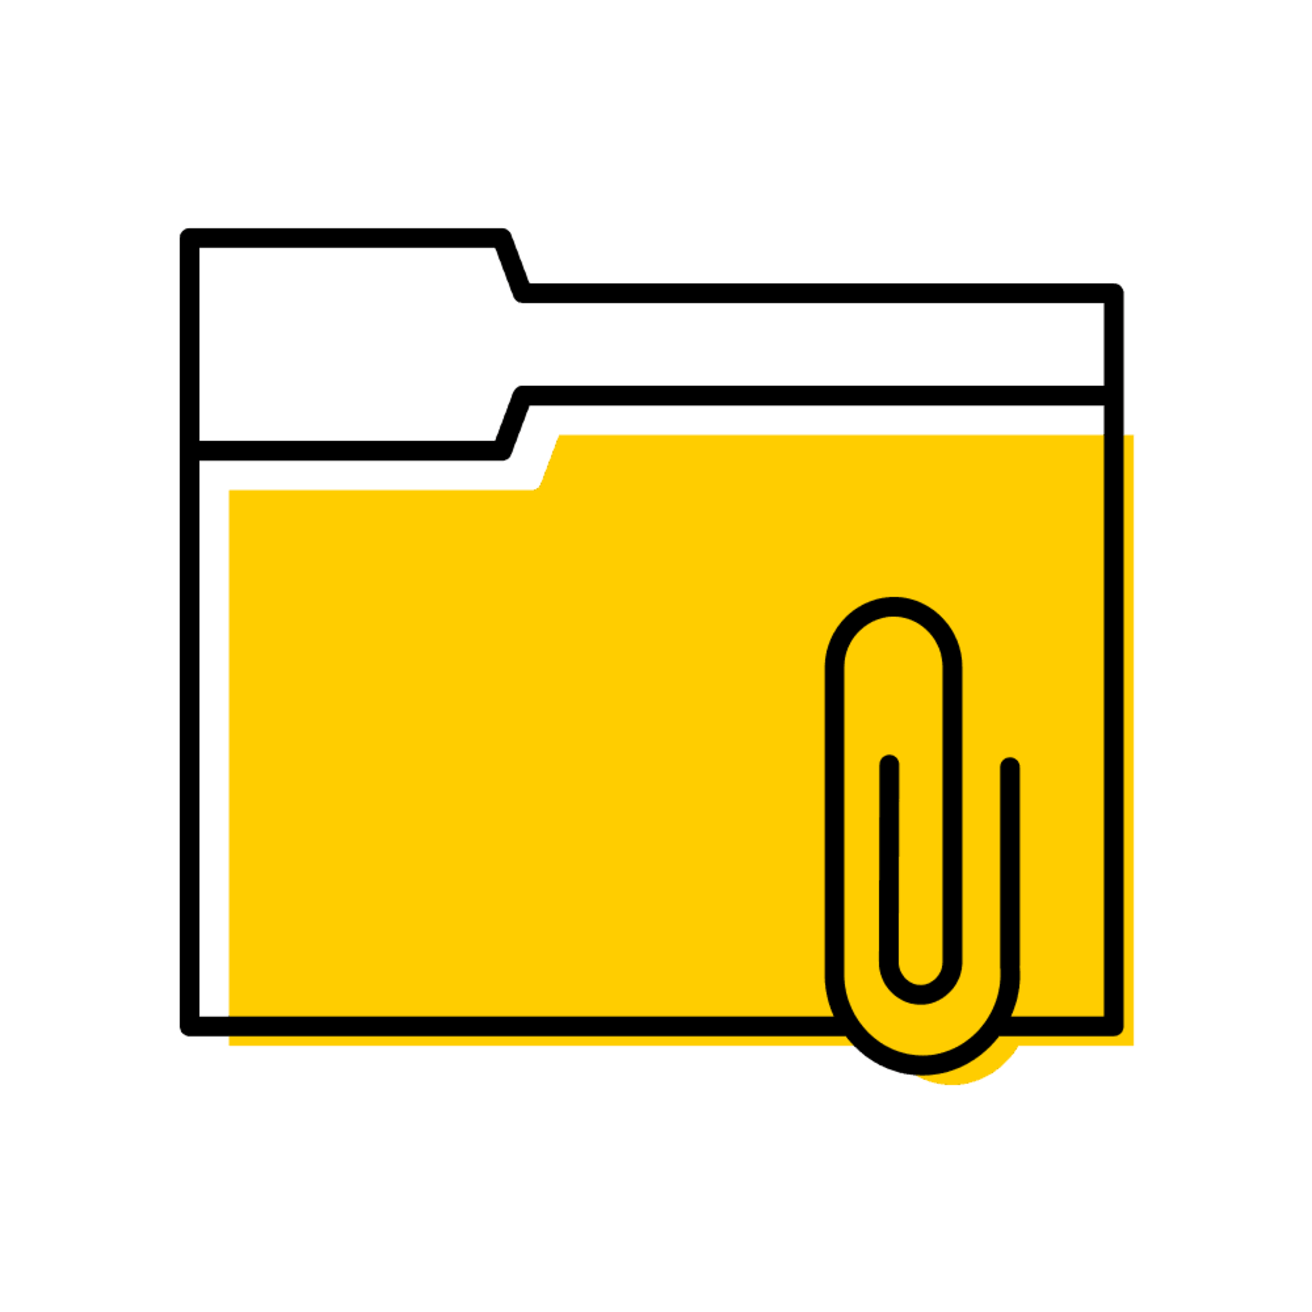 Icon of a file folder